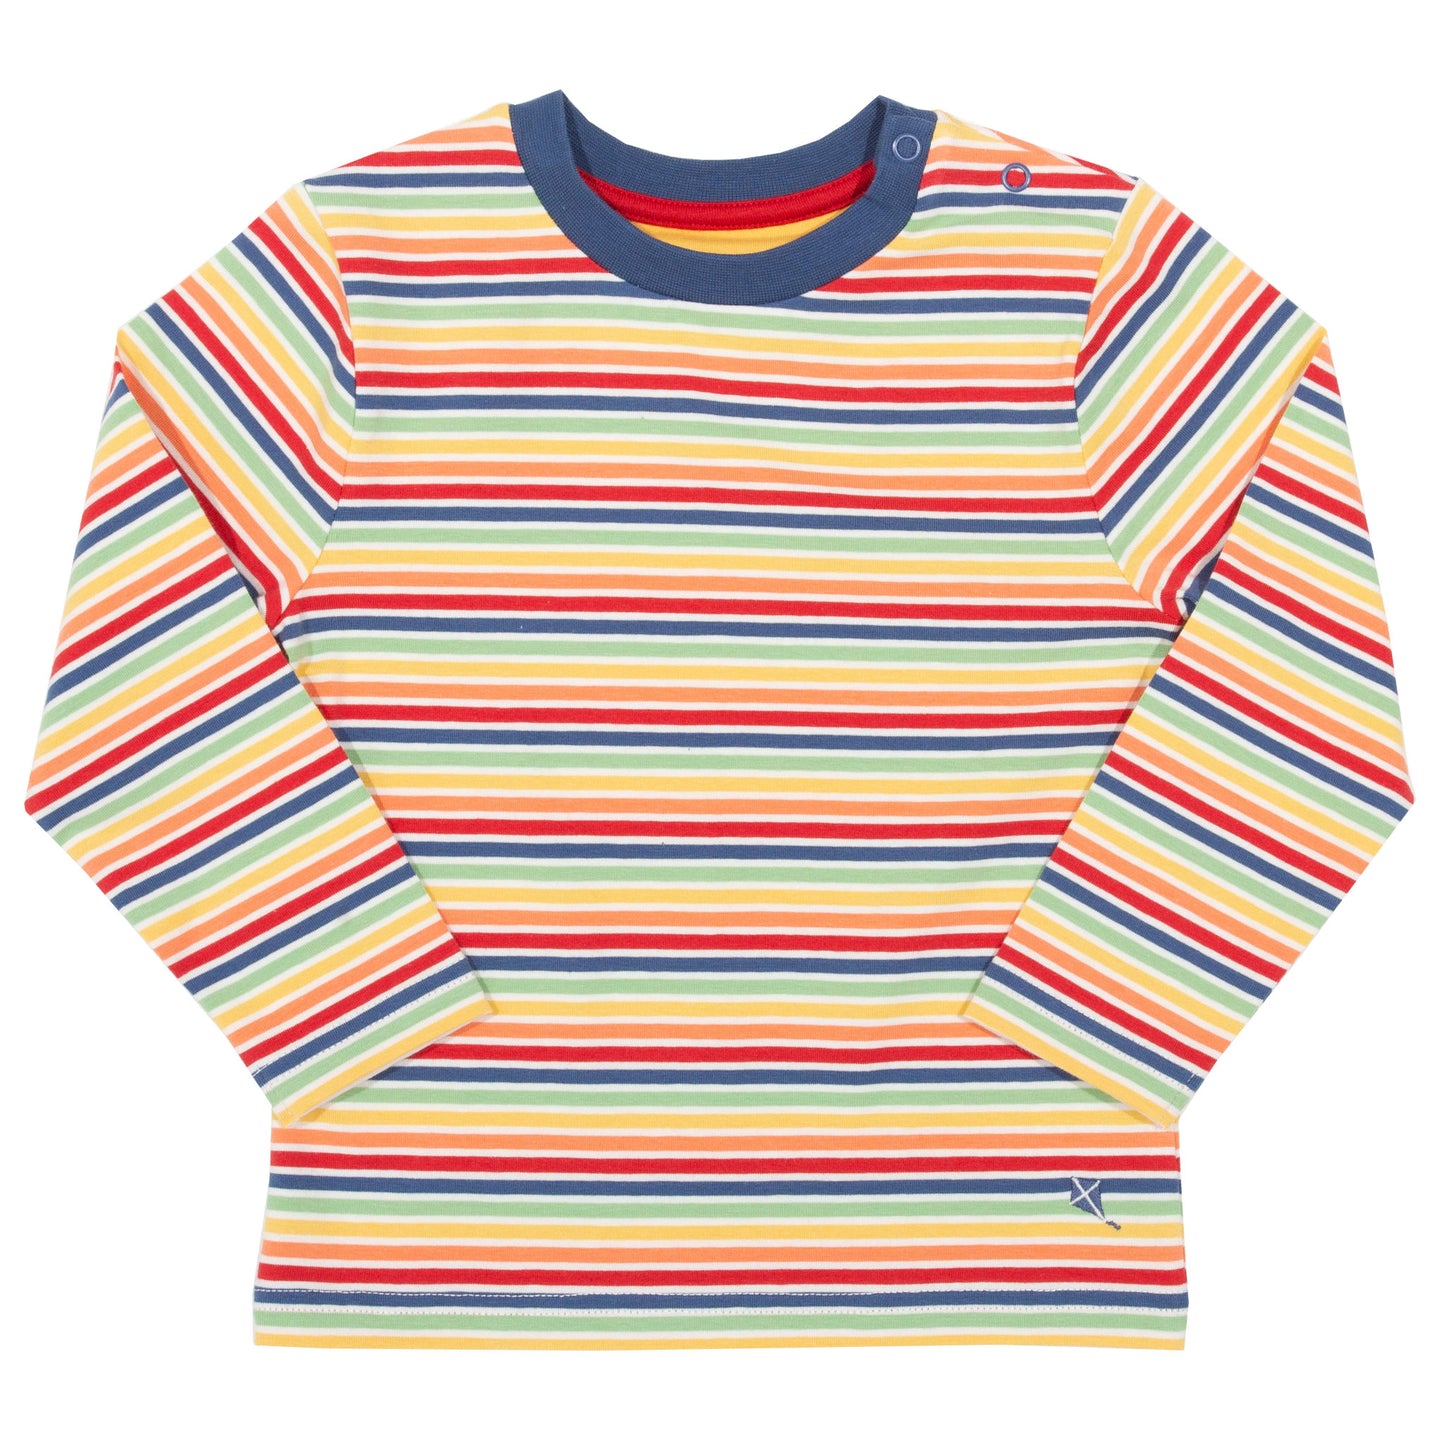 Rainbow stripe long sleeve top